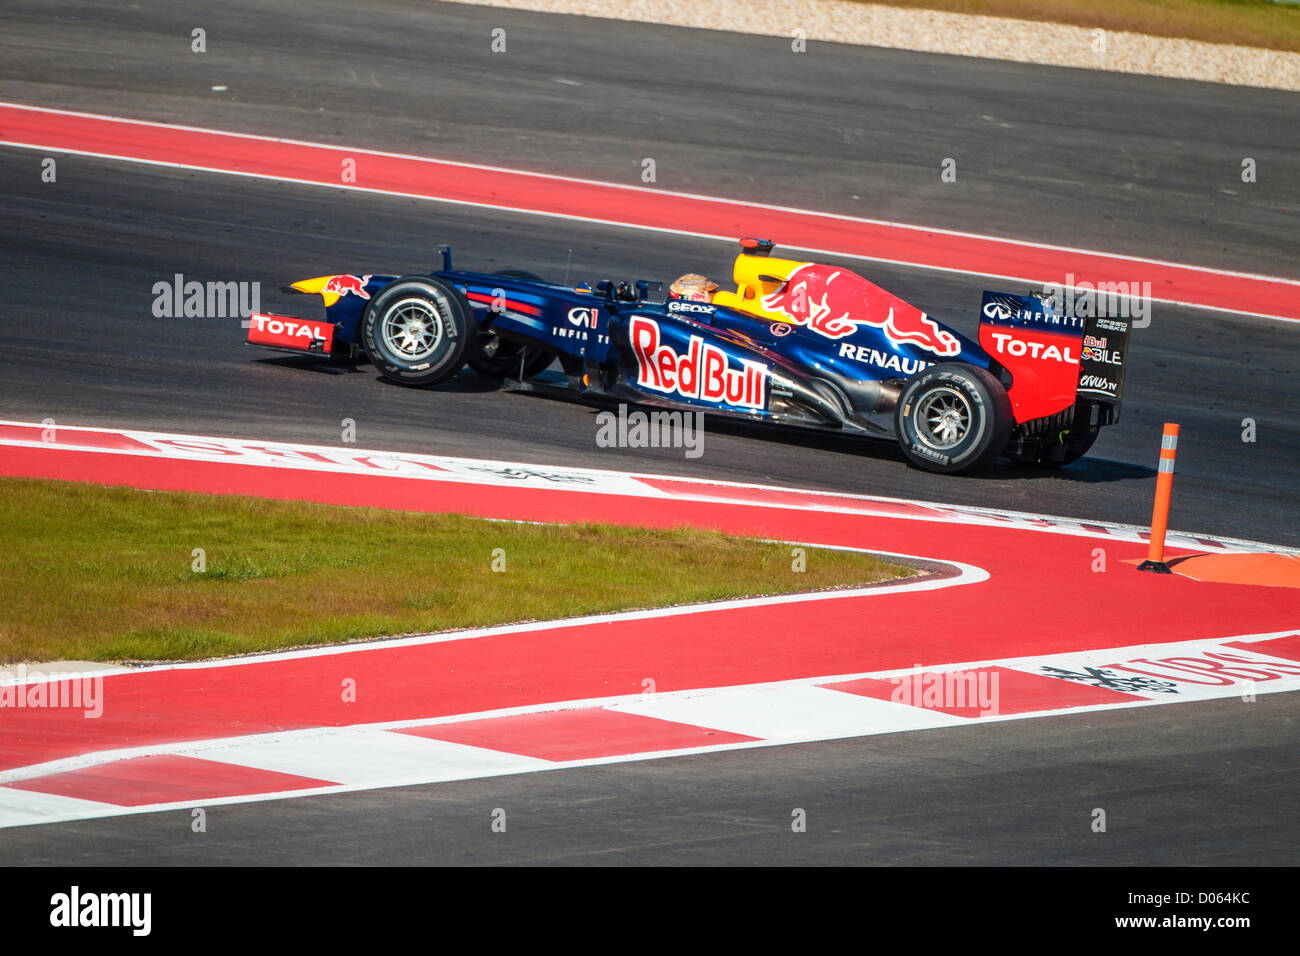 Austin, Texas, USA. 18. November 2012. F1 Circuit of the Americas 18. November 2012. Austin, Texas. Formel 1 Runde 19. Vettel, Red Bull Stockfoto